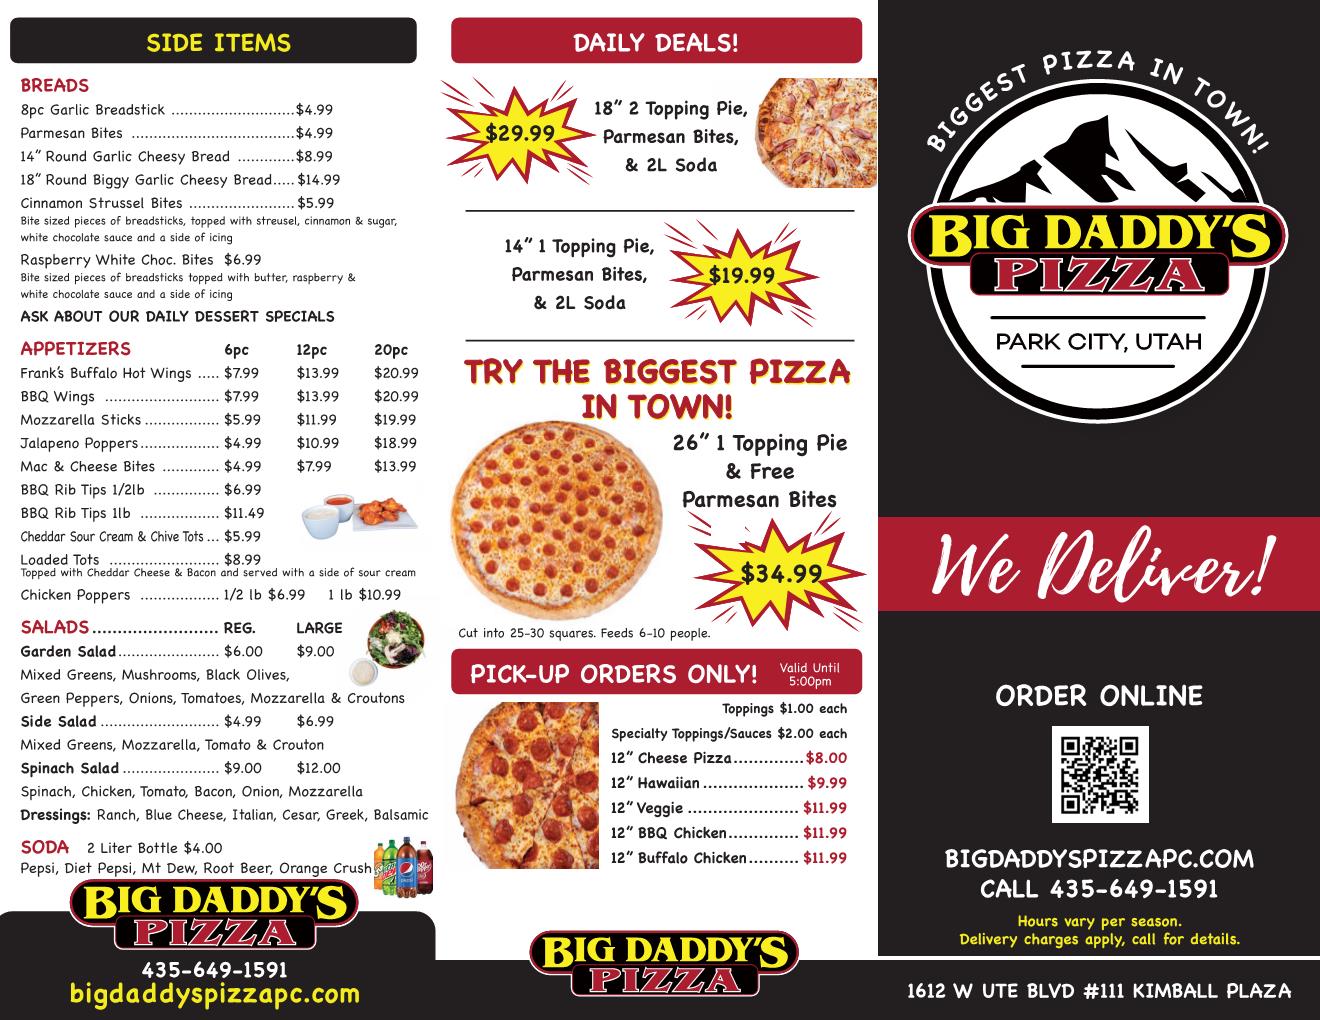 BIG DADDY PIZZA, Philadelphia - Menu, Prices & Restaurant Reviews